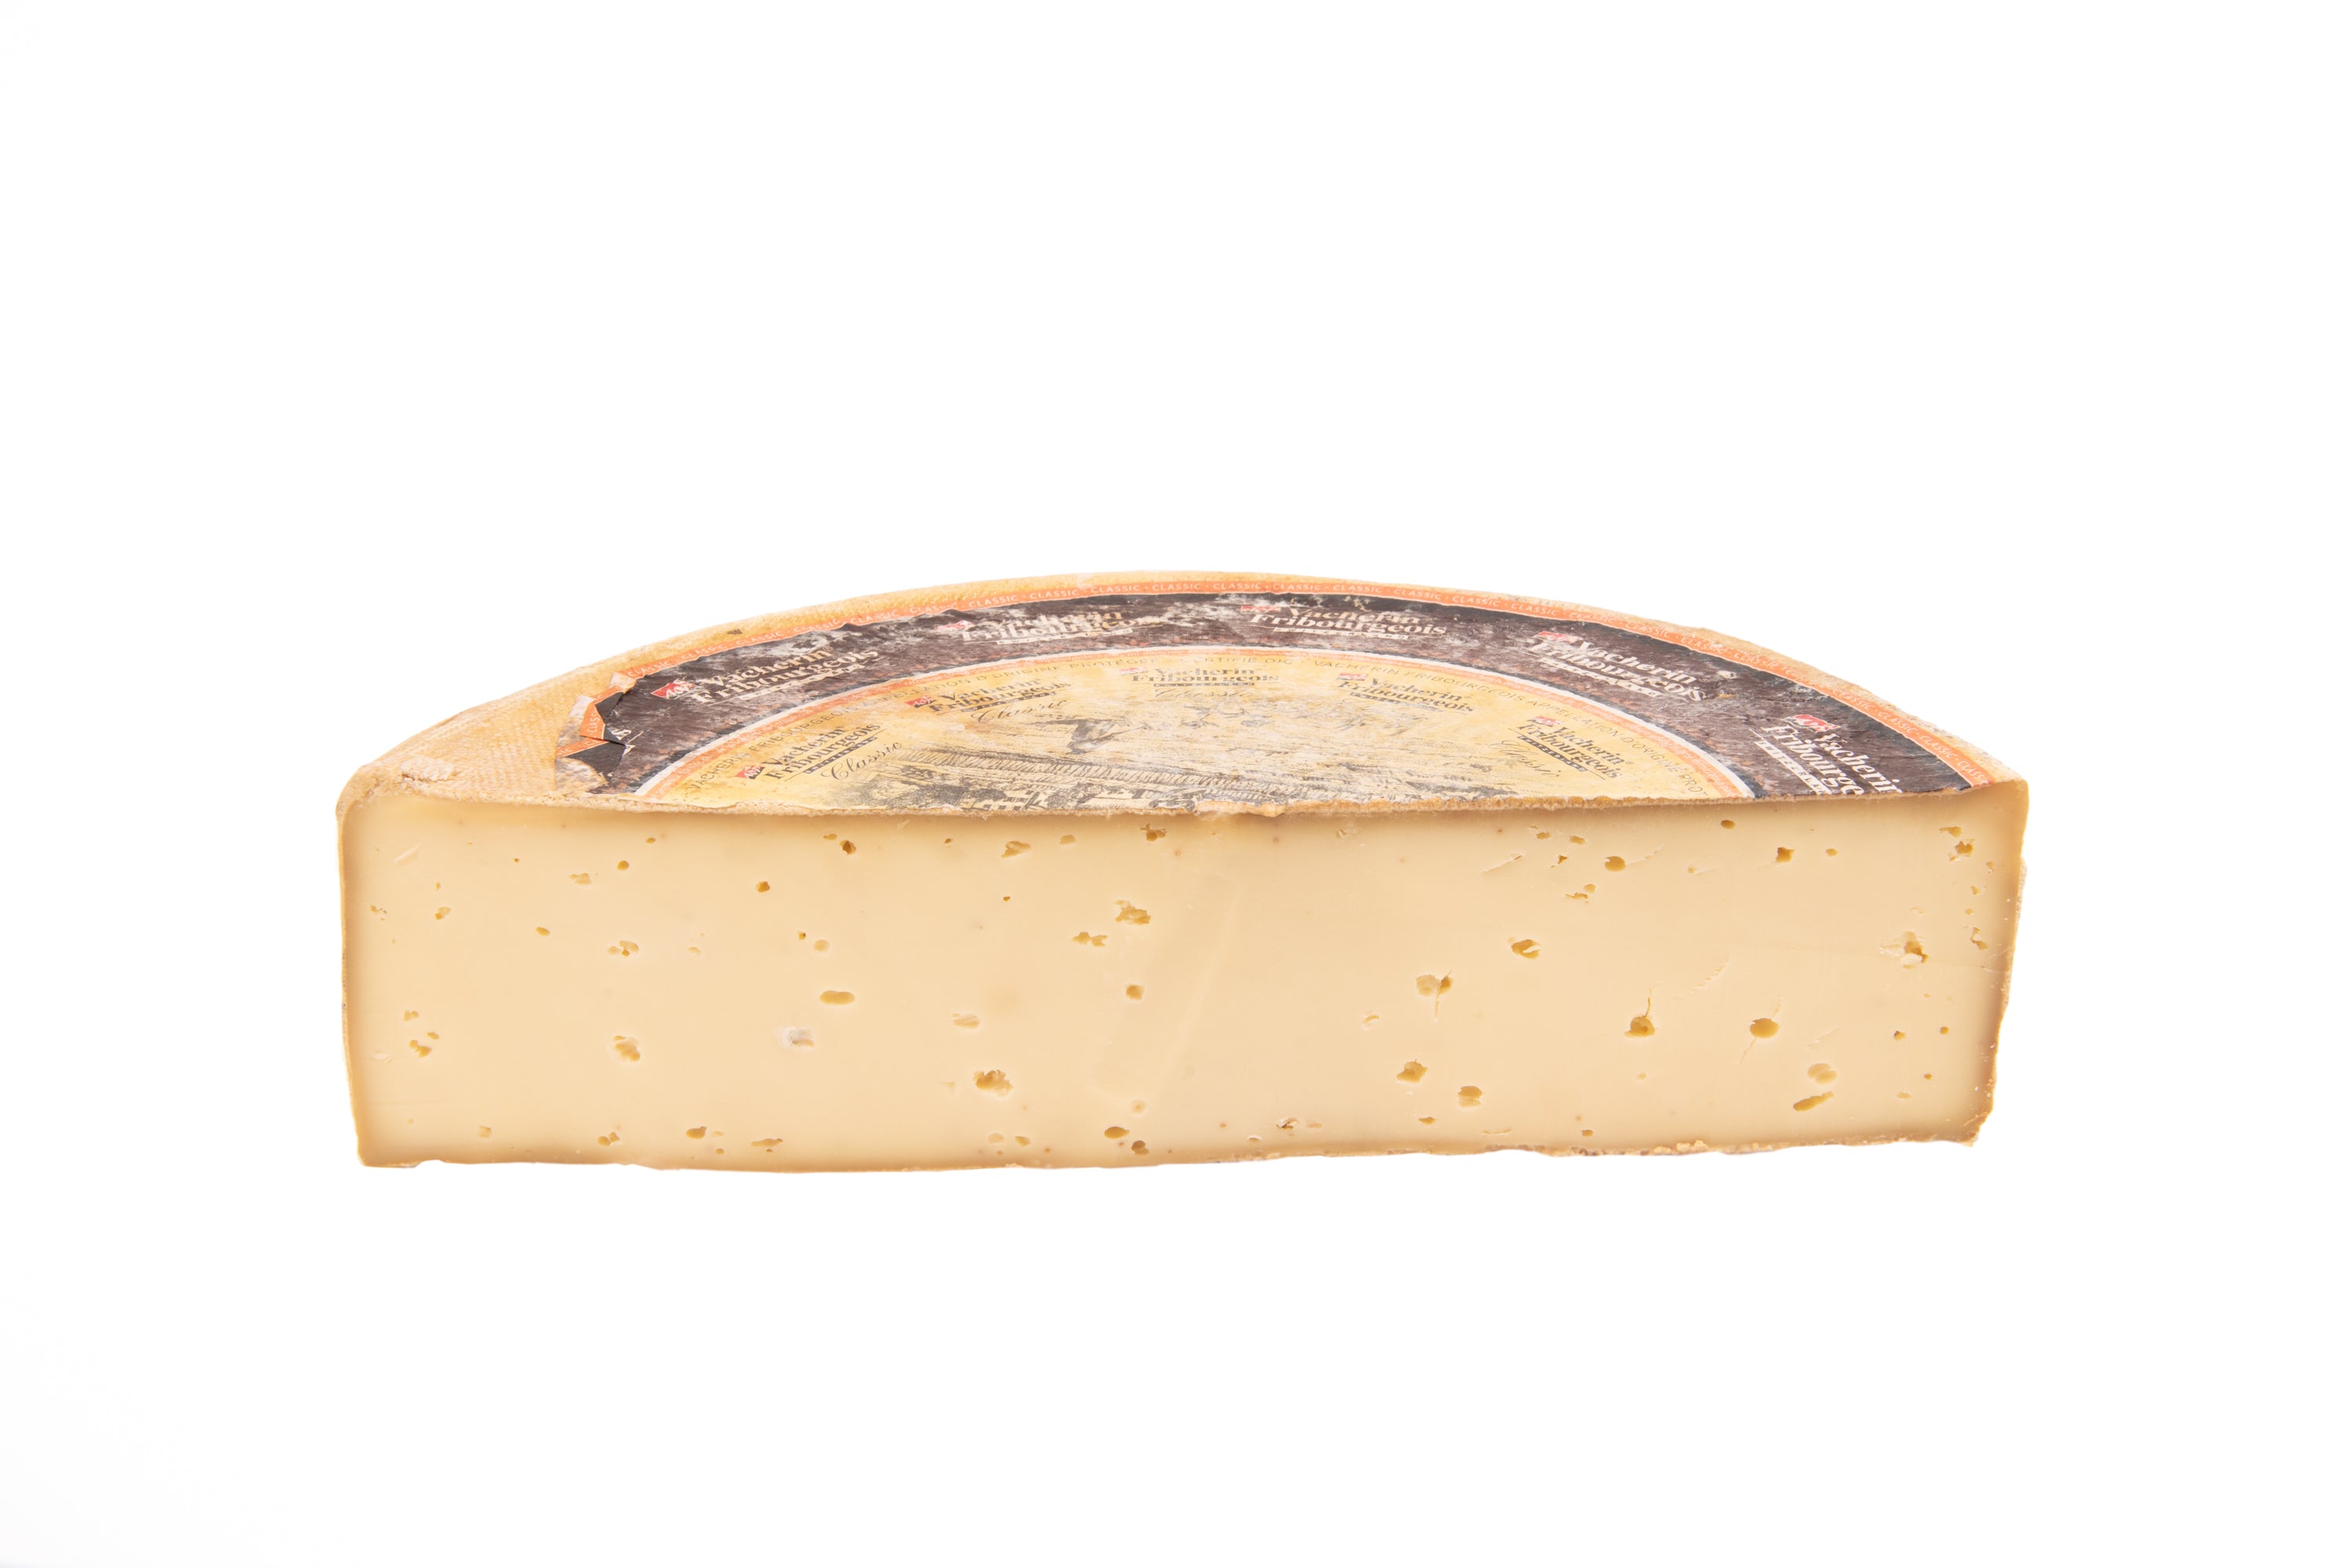 Cheese - Vacherin Fribourg 8 oz